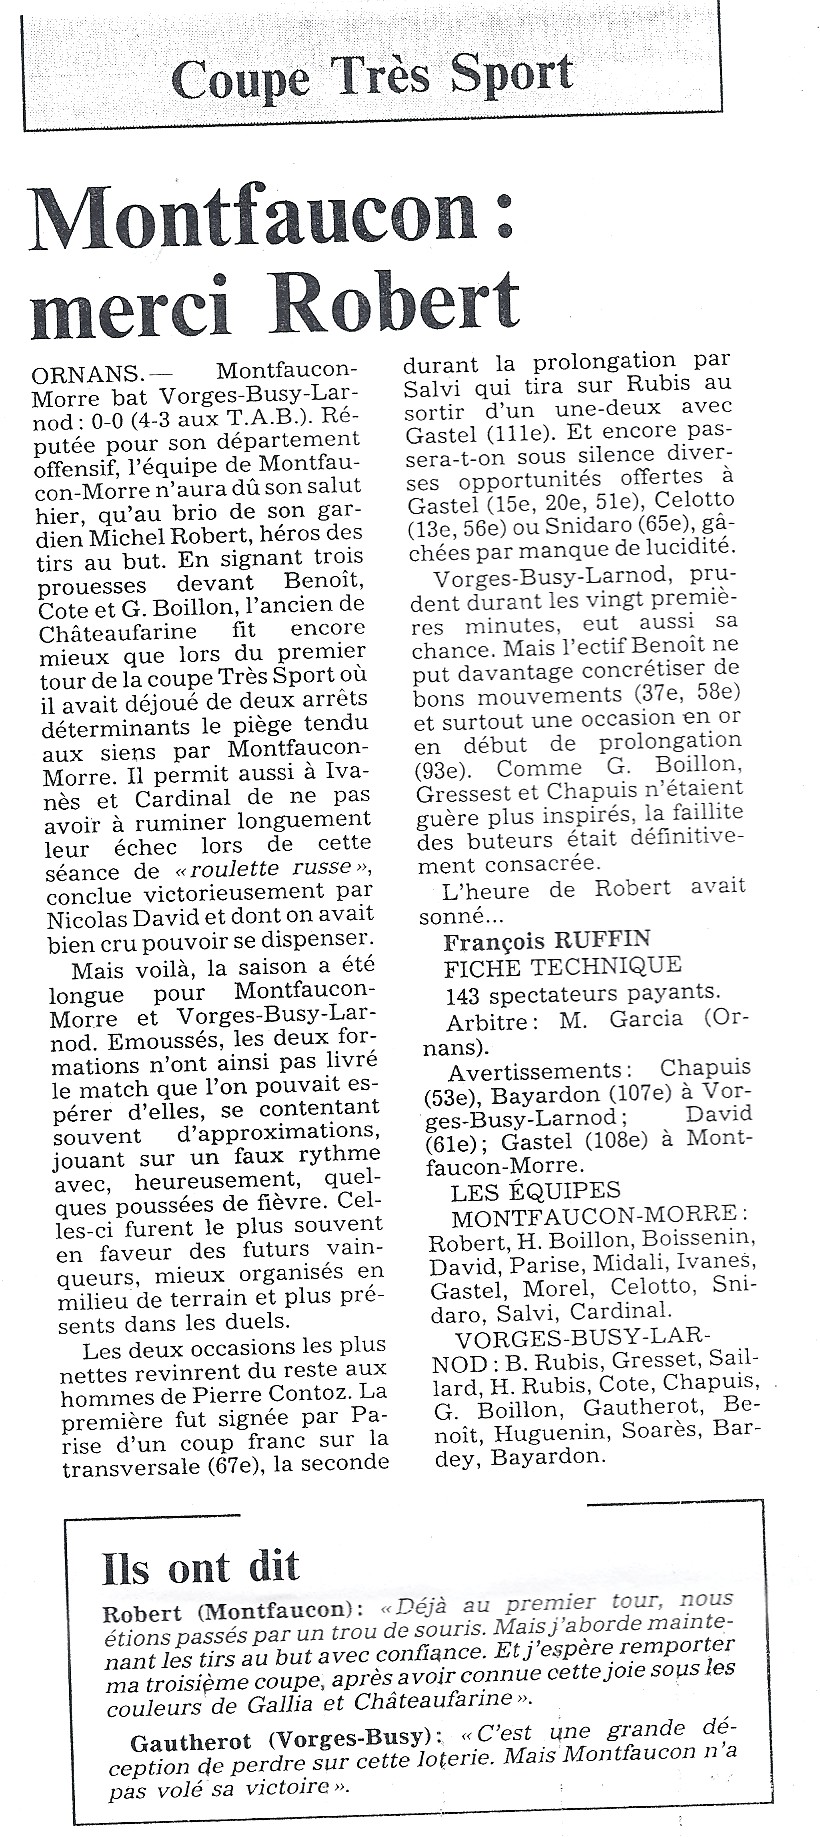 06/1991 - Coupe Très Sport - Merci ROBERT